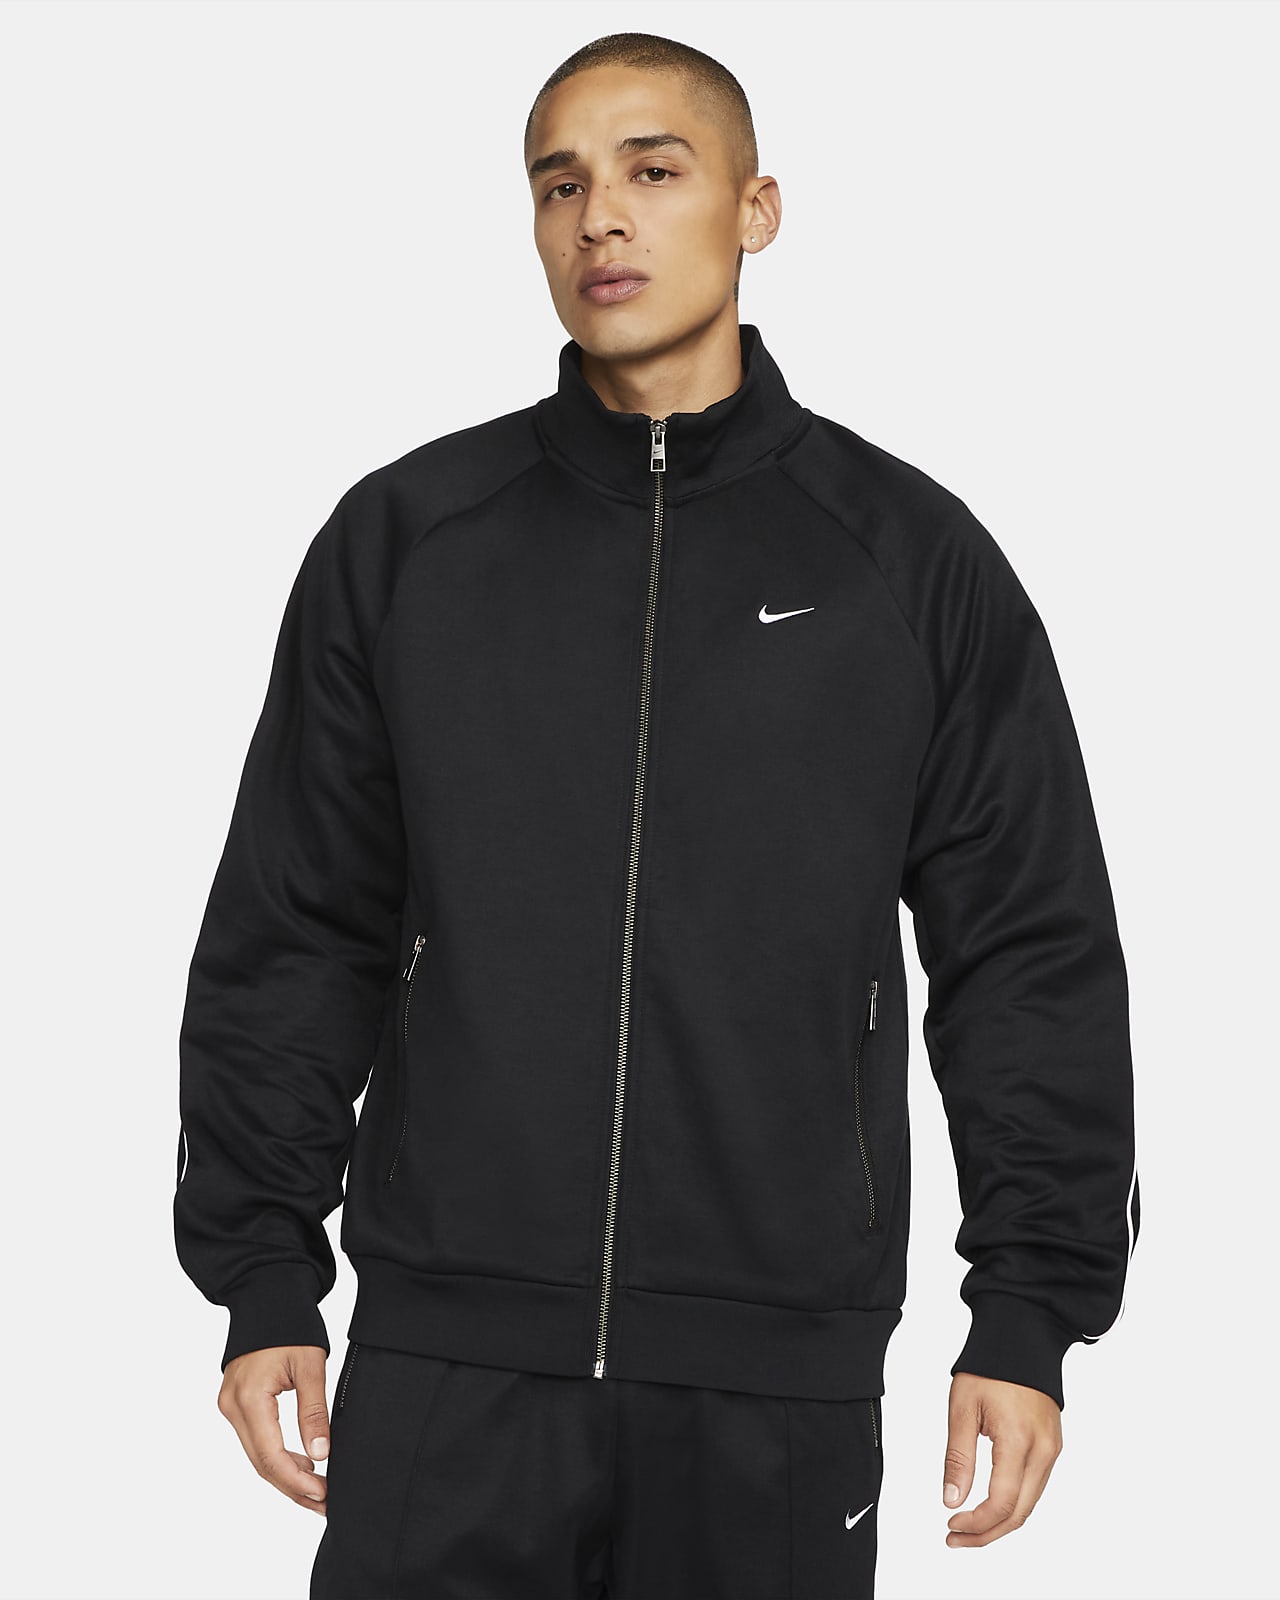 Nike Sportswear Authentics Men's Track 